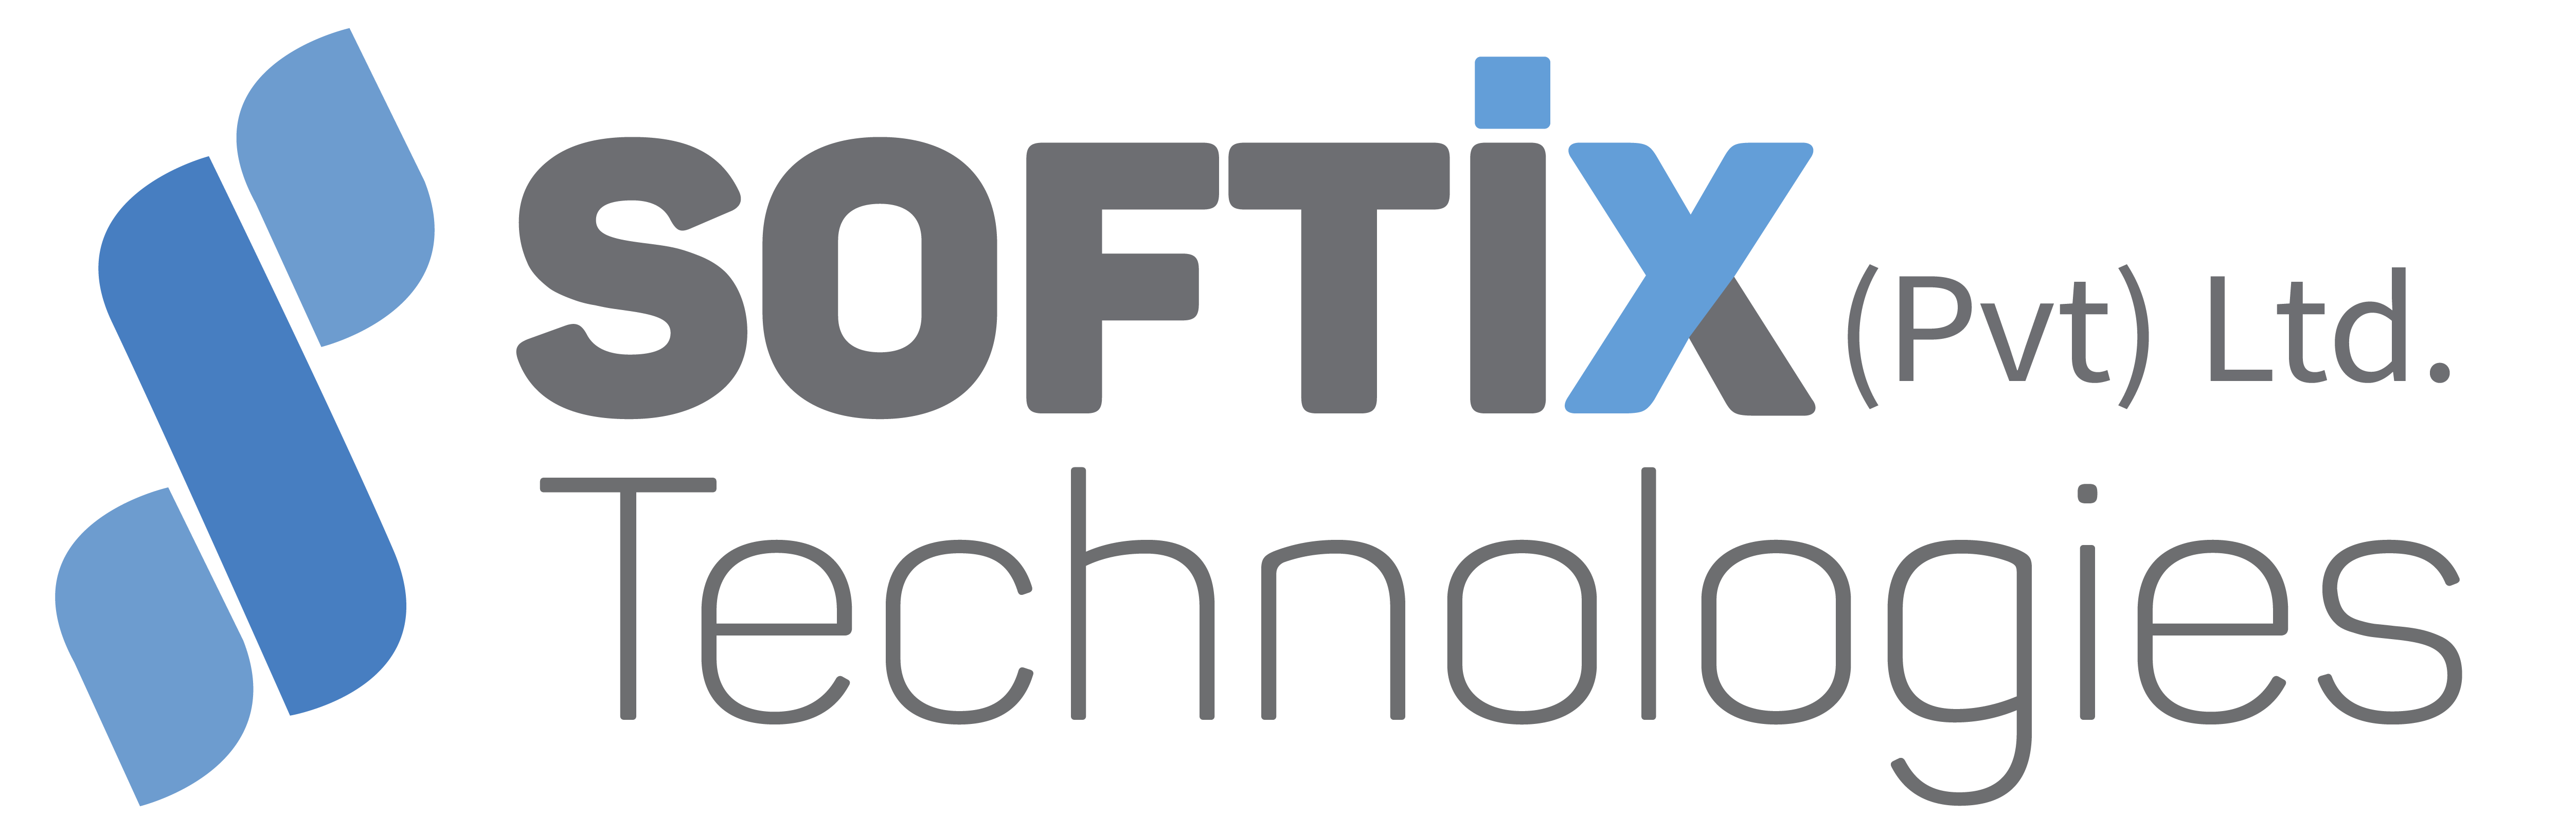 Softix logo